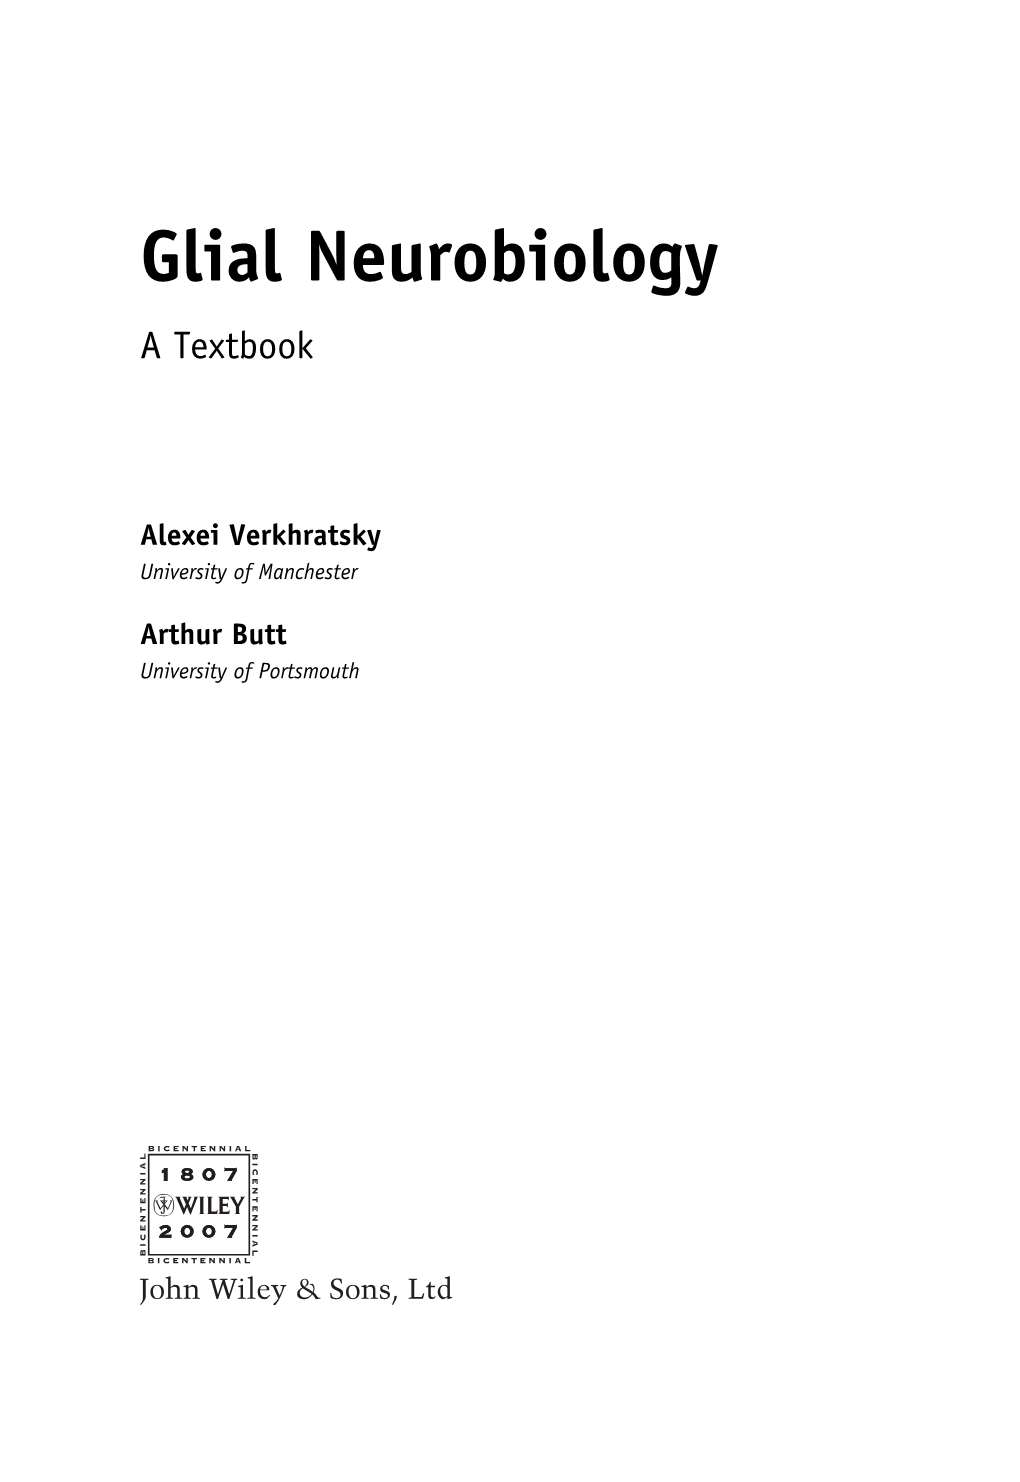 Glial Neurobiology a Textbook